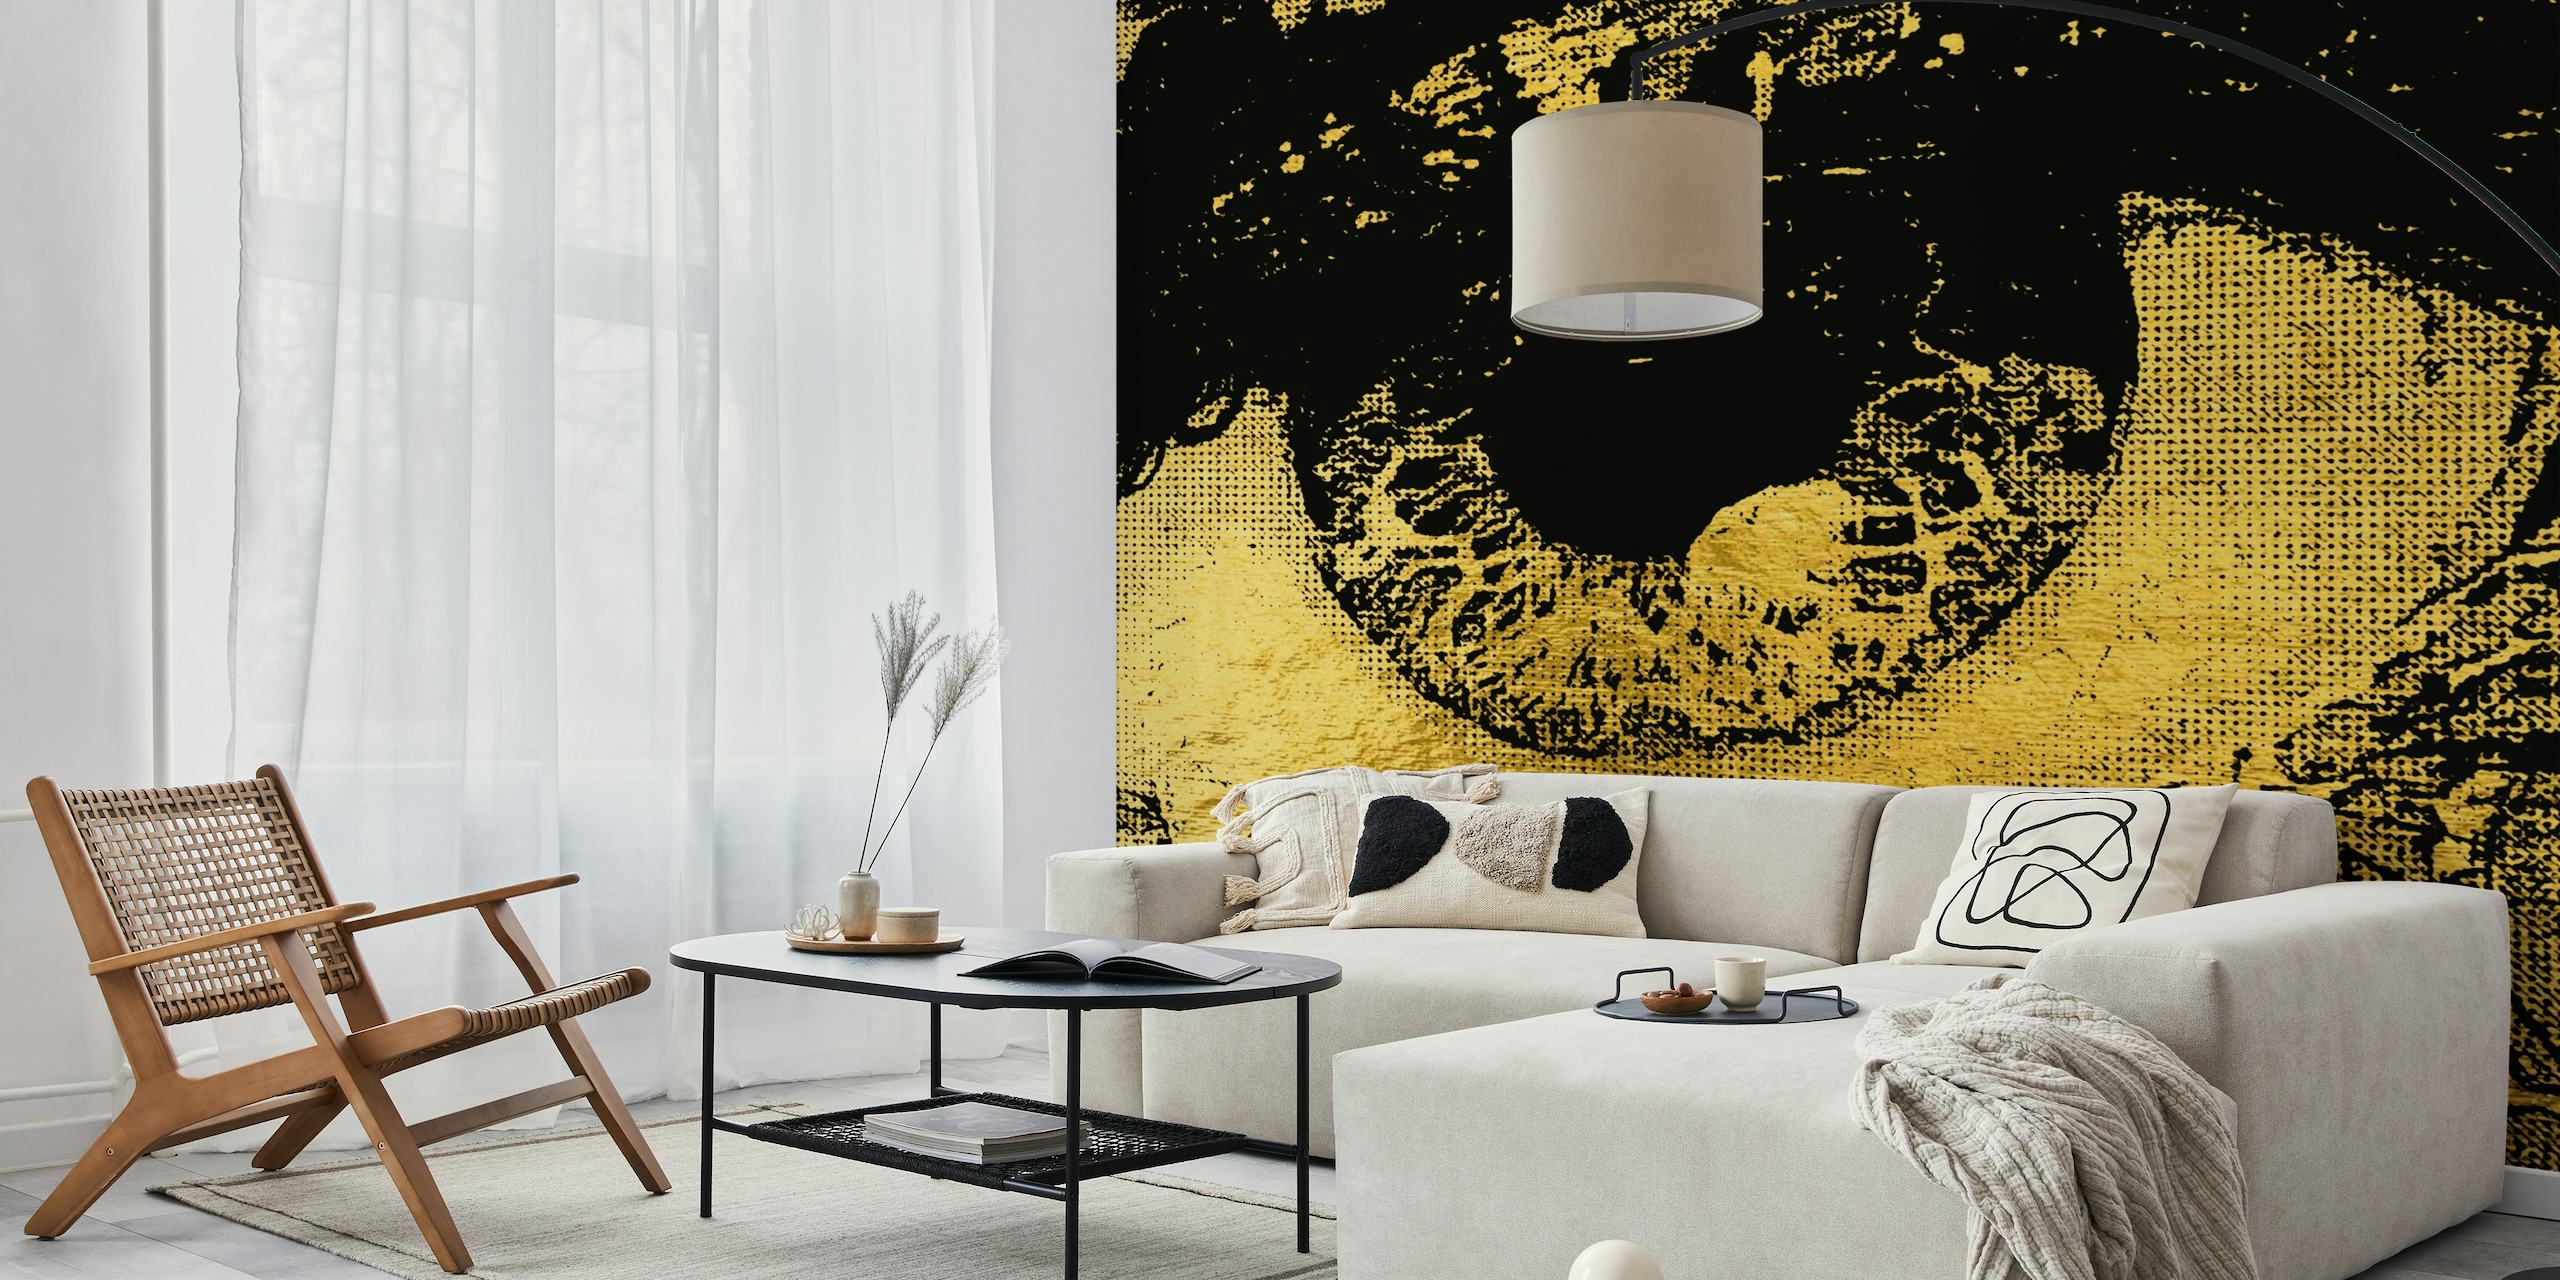 Fototapeta na zeď ve stylu zlaté pop art s texturou pozadí